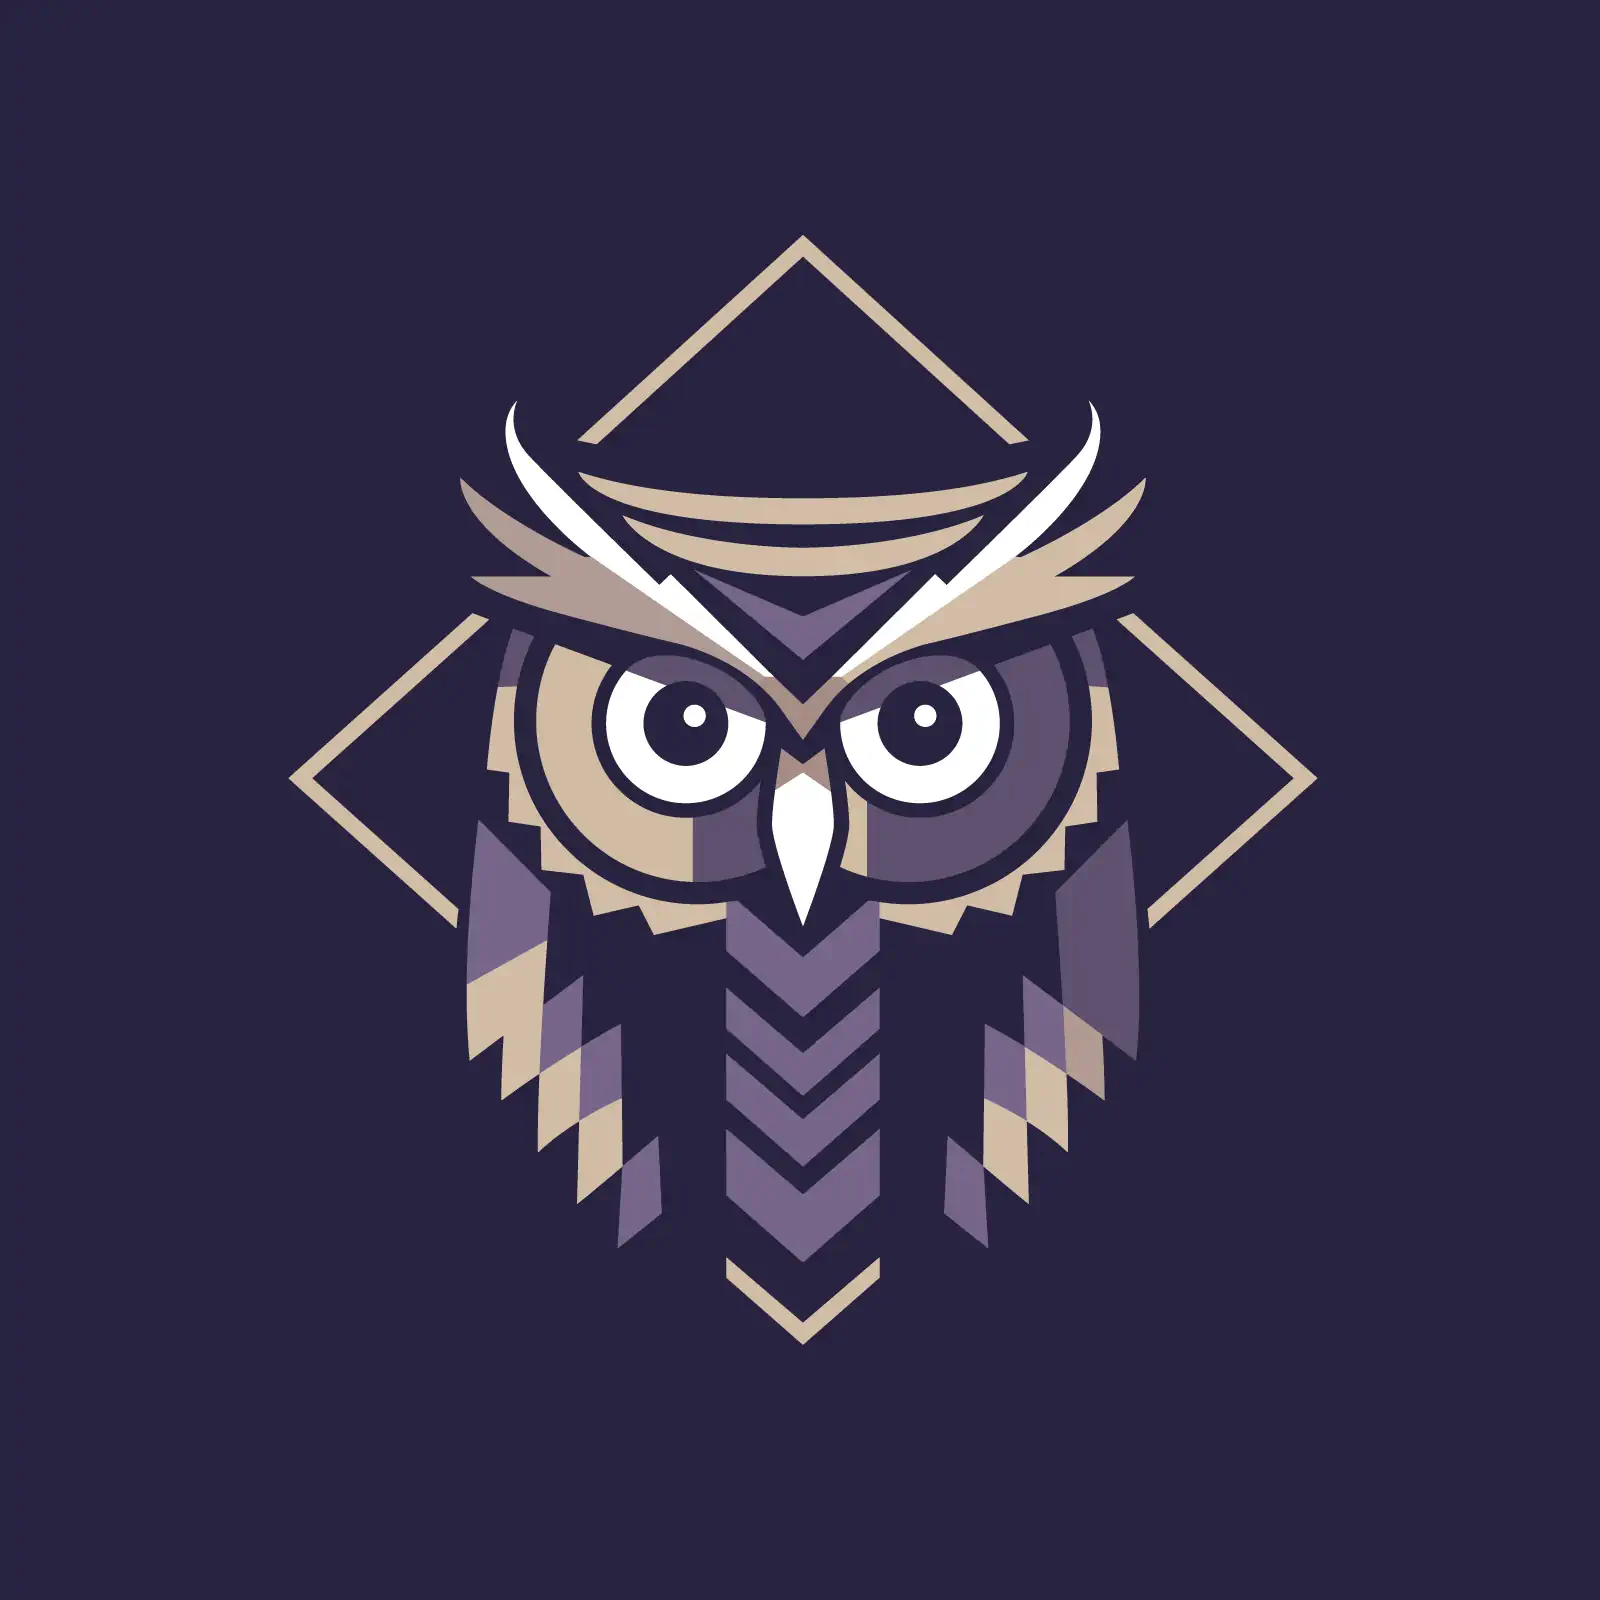 Geometric owl, iconic vector logo